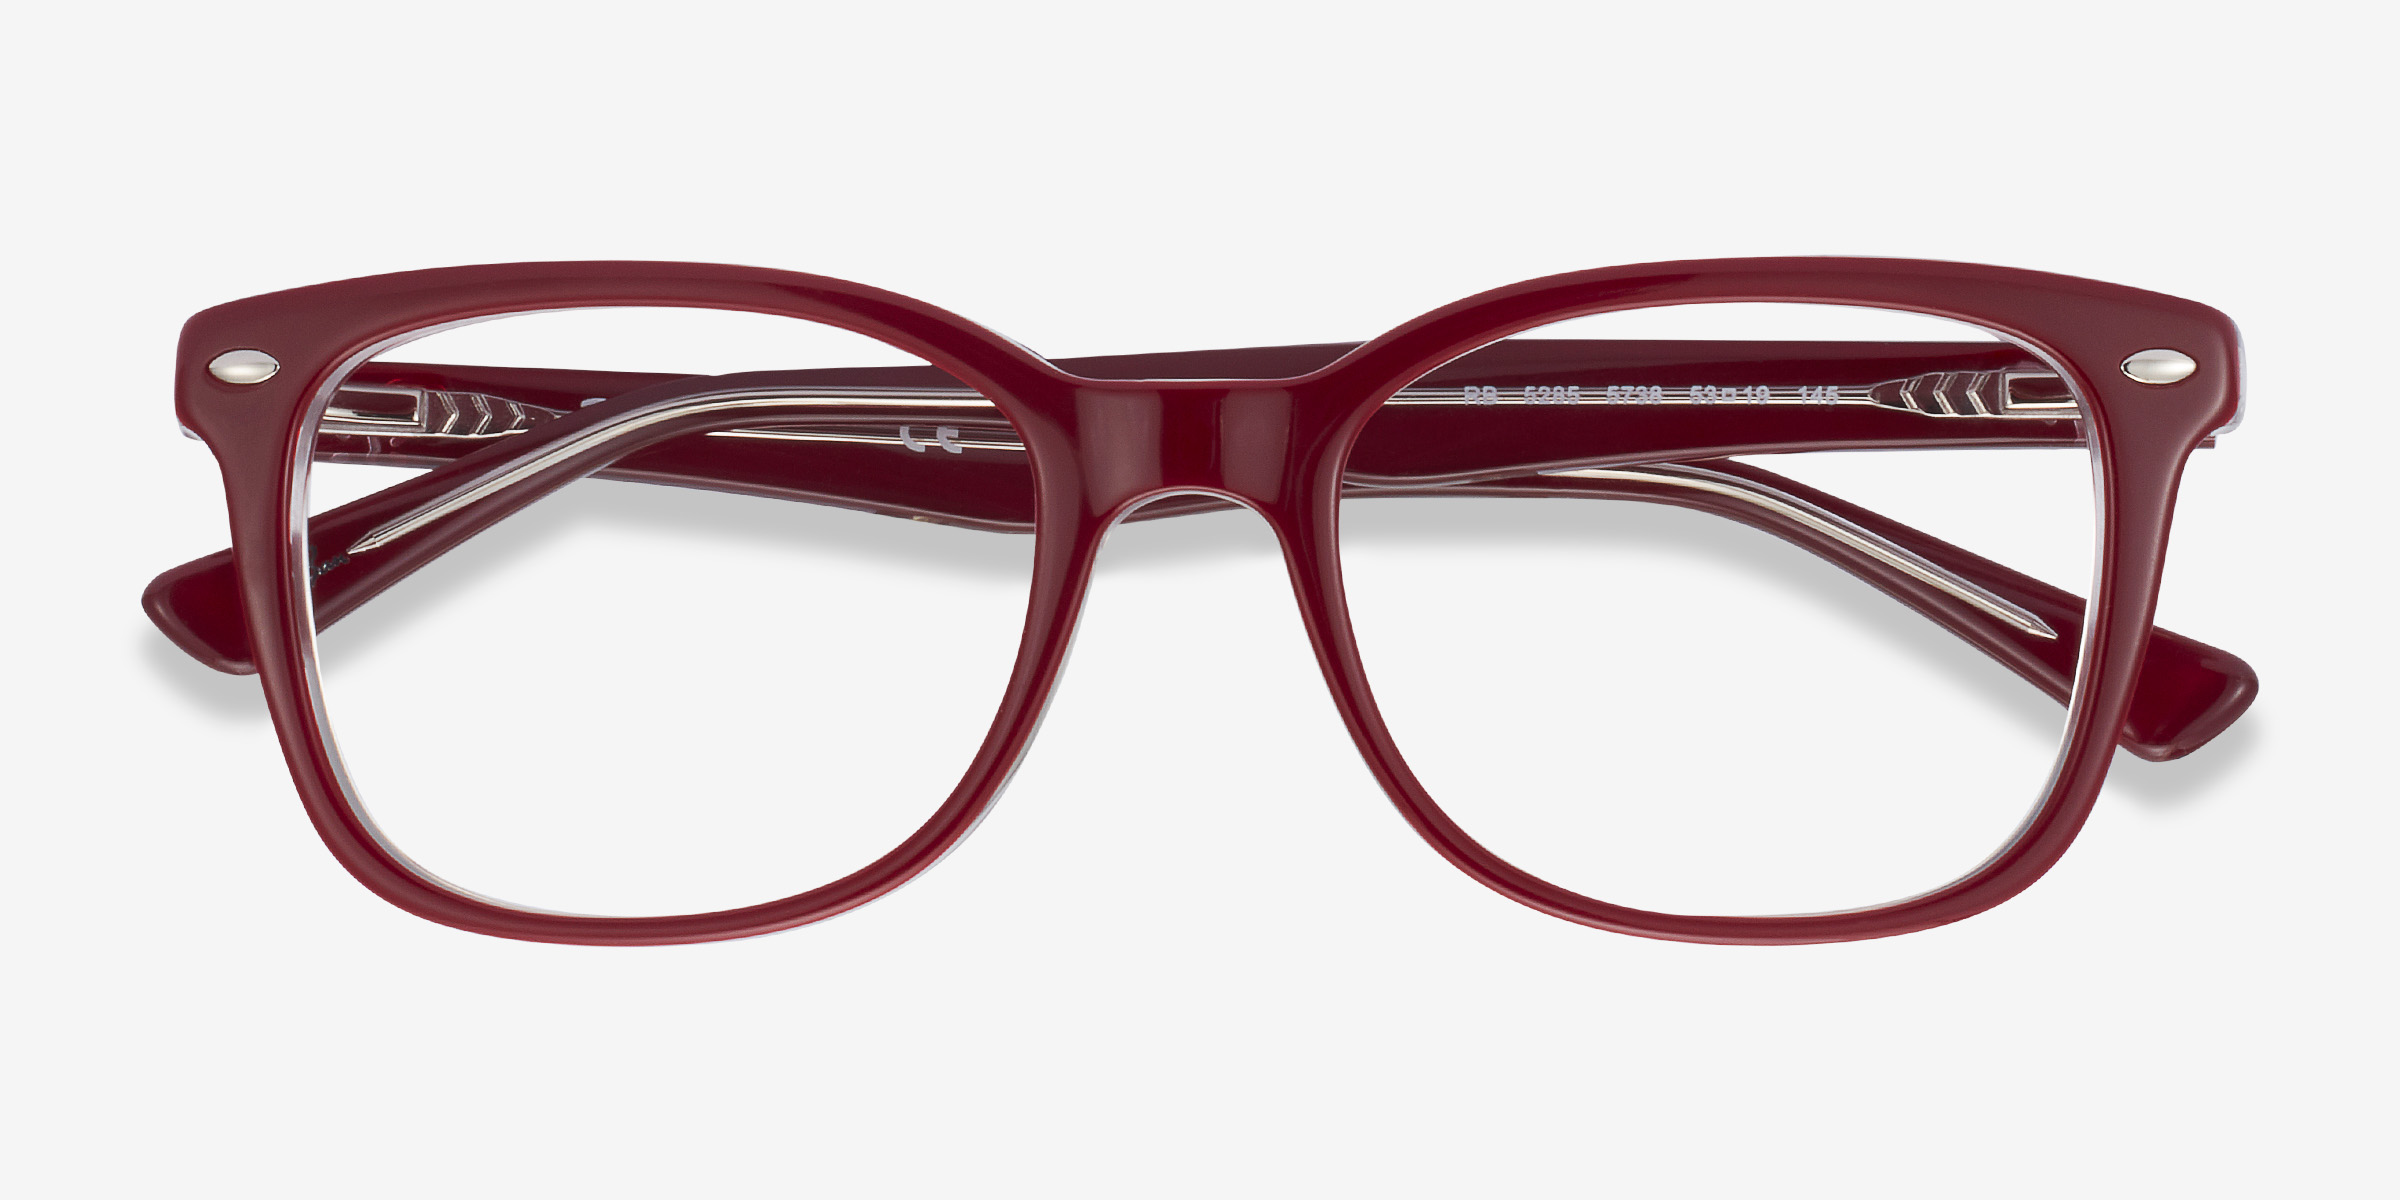 Ray Ban Rb5285 Square Burgundy Frame Eyeglasses Eyebuydirect